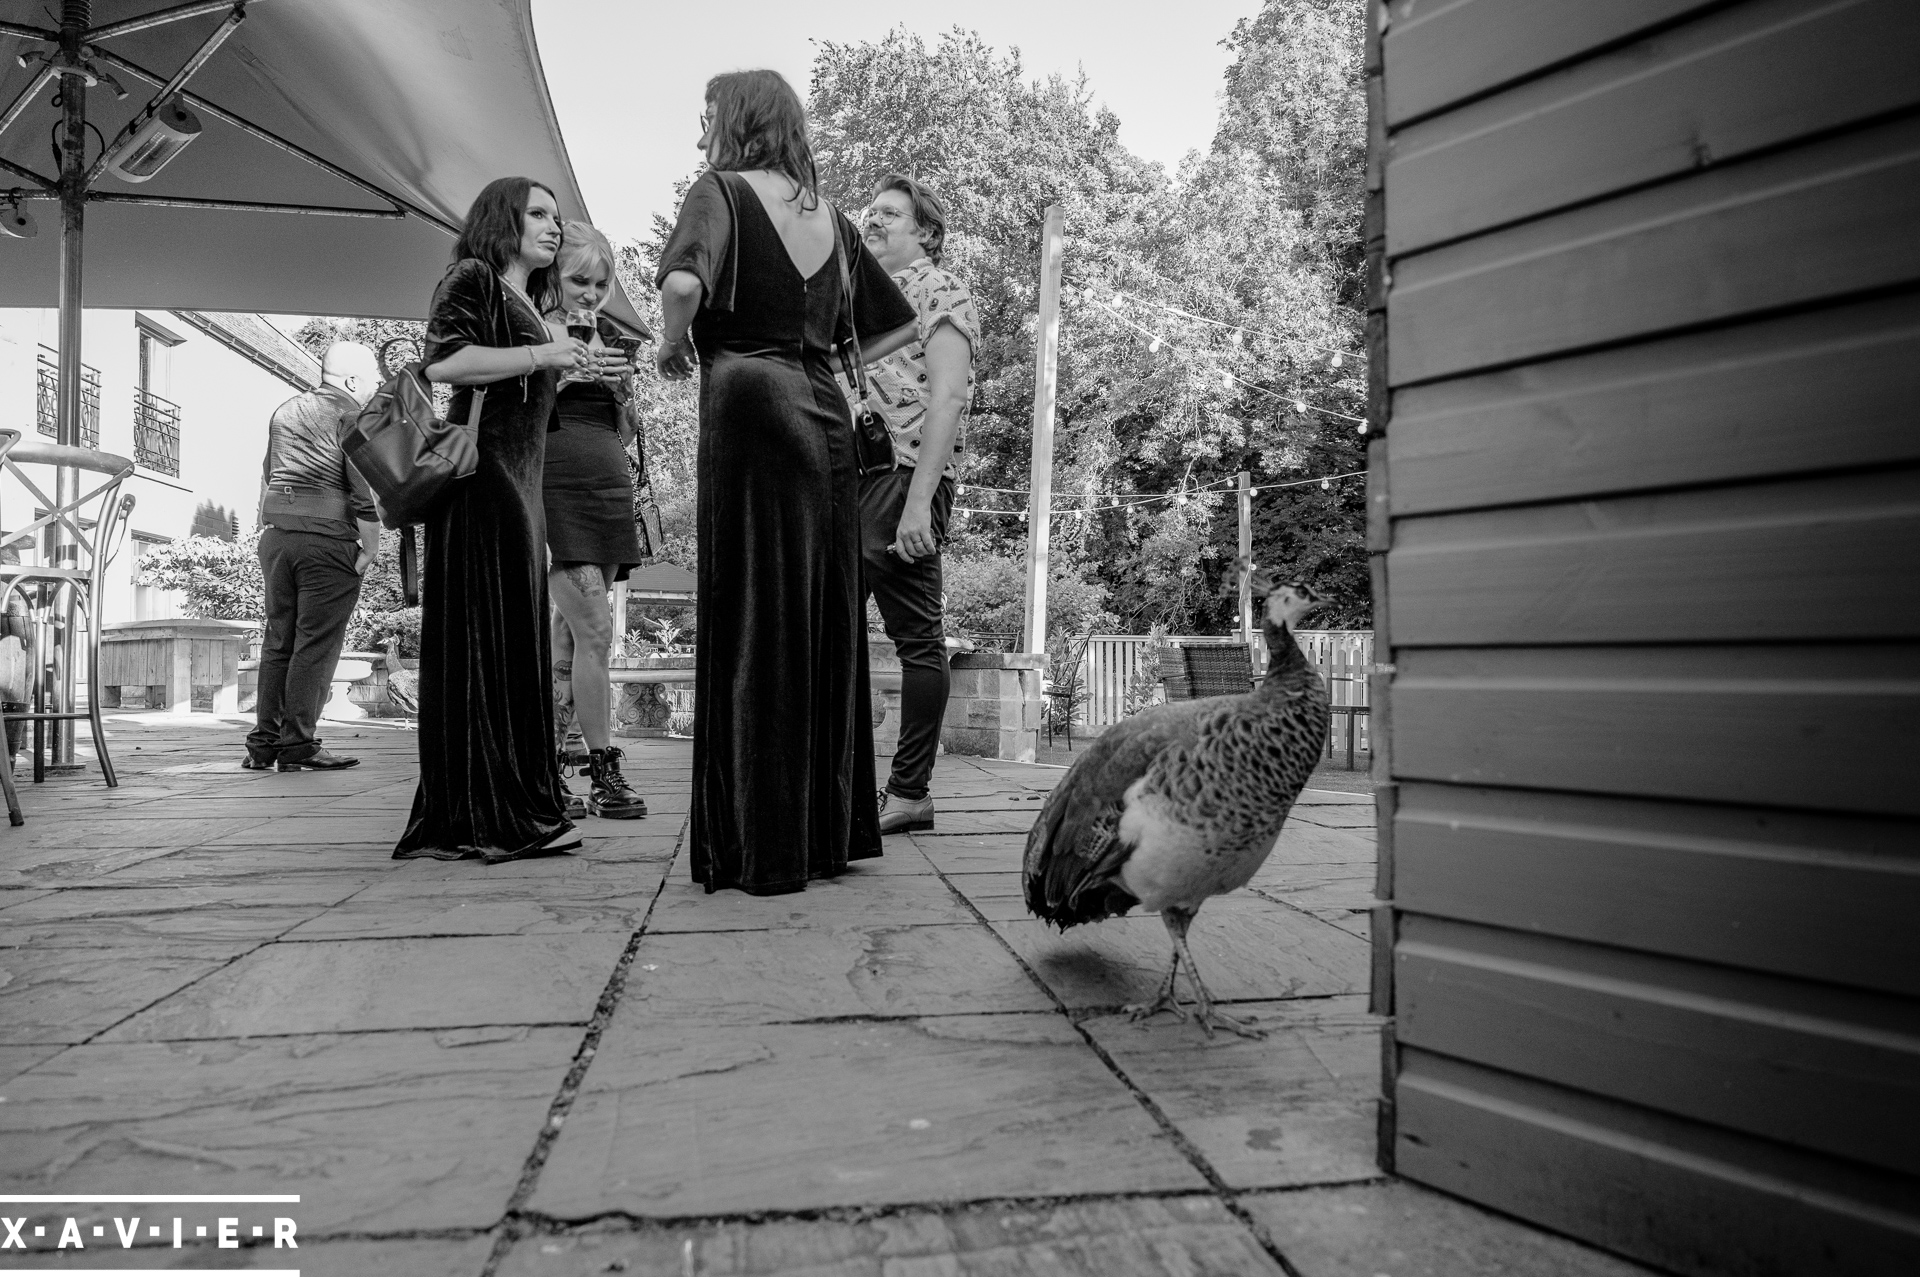 peacock walks past the bridesmaids